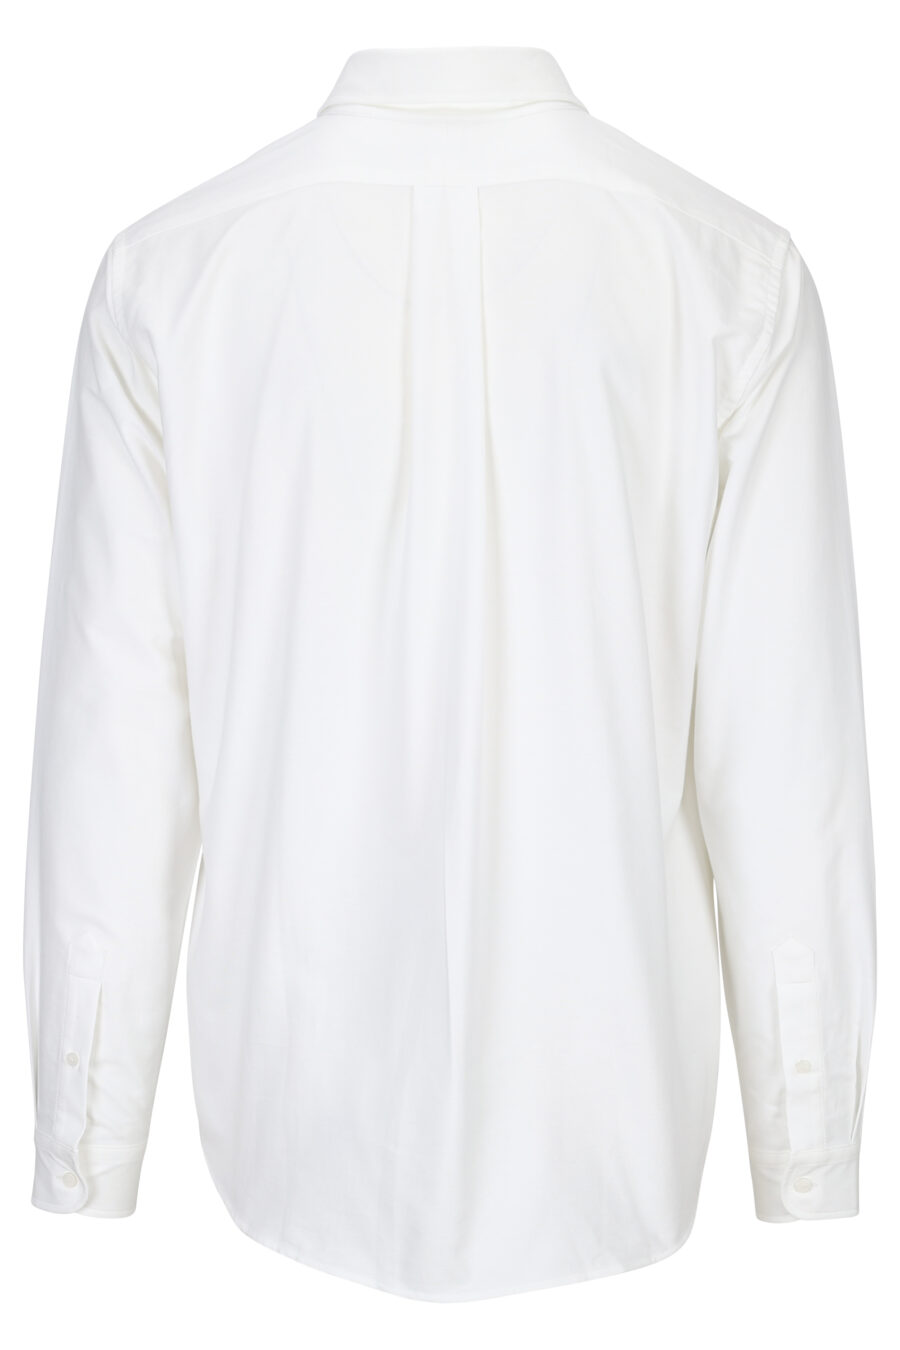 Camisa branca com mini-logotipo "boke flower" - 3612230543140 12